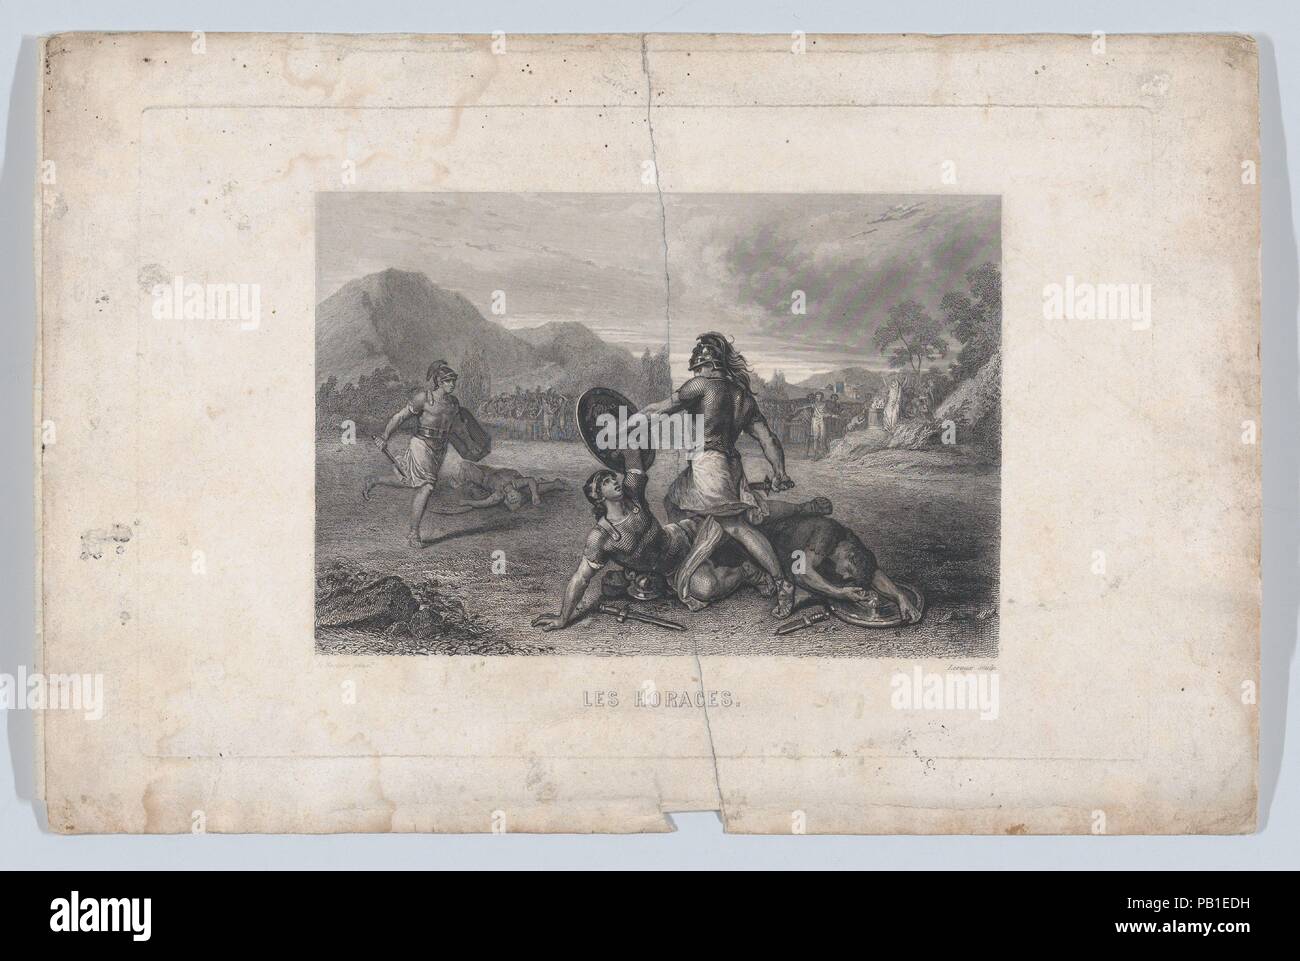 The Horatii. Artist: Jean Marie Leroux (French, Paris 1788-1870 Paris); After Jean Jacques François Le Barbier (French, Rouen 1738-1826 Paris); After Le Bachier (French, active 1852) ?. Dimensions: Sheet: 7 1/16 × 10 3/4 in. (18 × 27.3 cm)  Plate: 5 3/4 × 9 in. (14.6 × 22.8 cm). Date: 1852. Museum: Metropolitan Museum of Art, New York, USA. Stock Photo